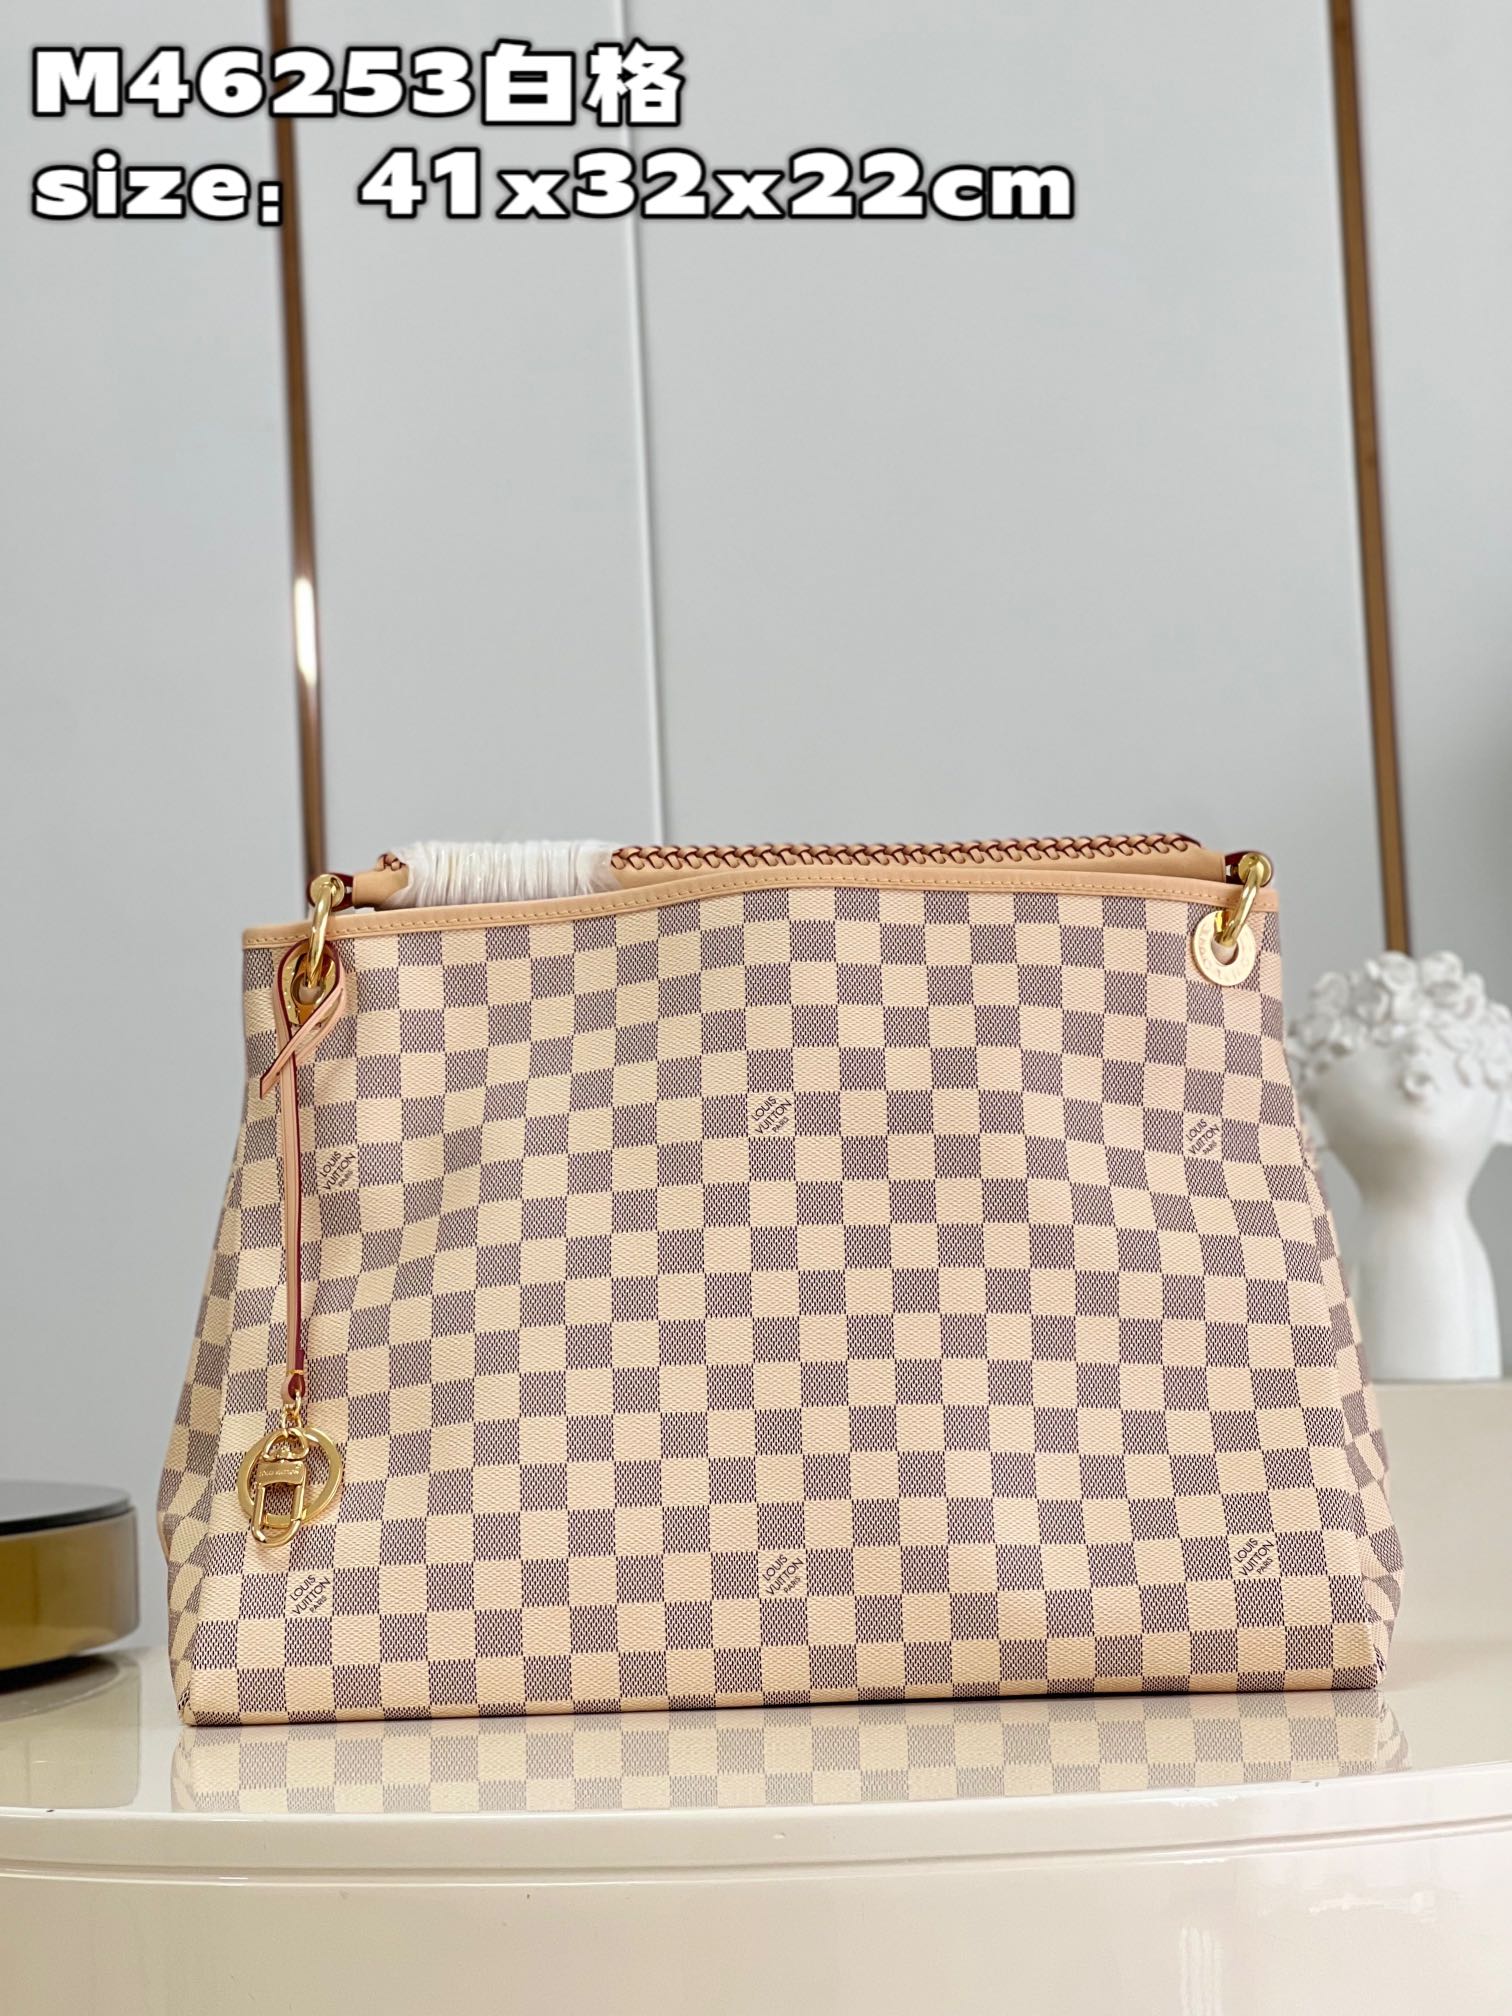 Louis Vuitton LV Artsy Bags Handbags Gold White Yellow Damier Azur Canvas Fashion M46253